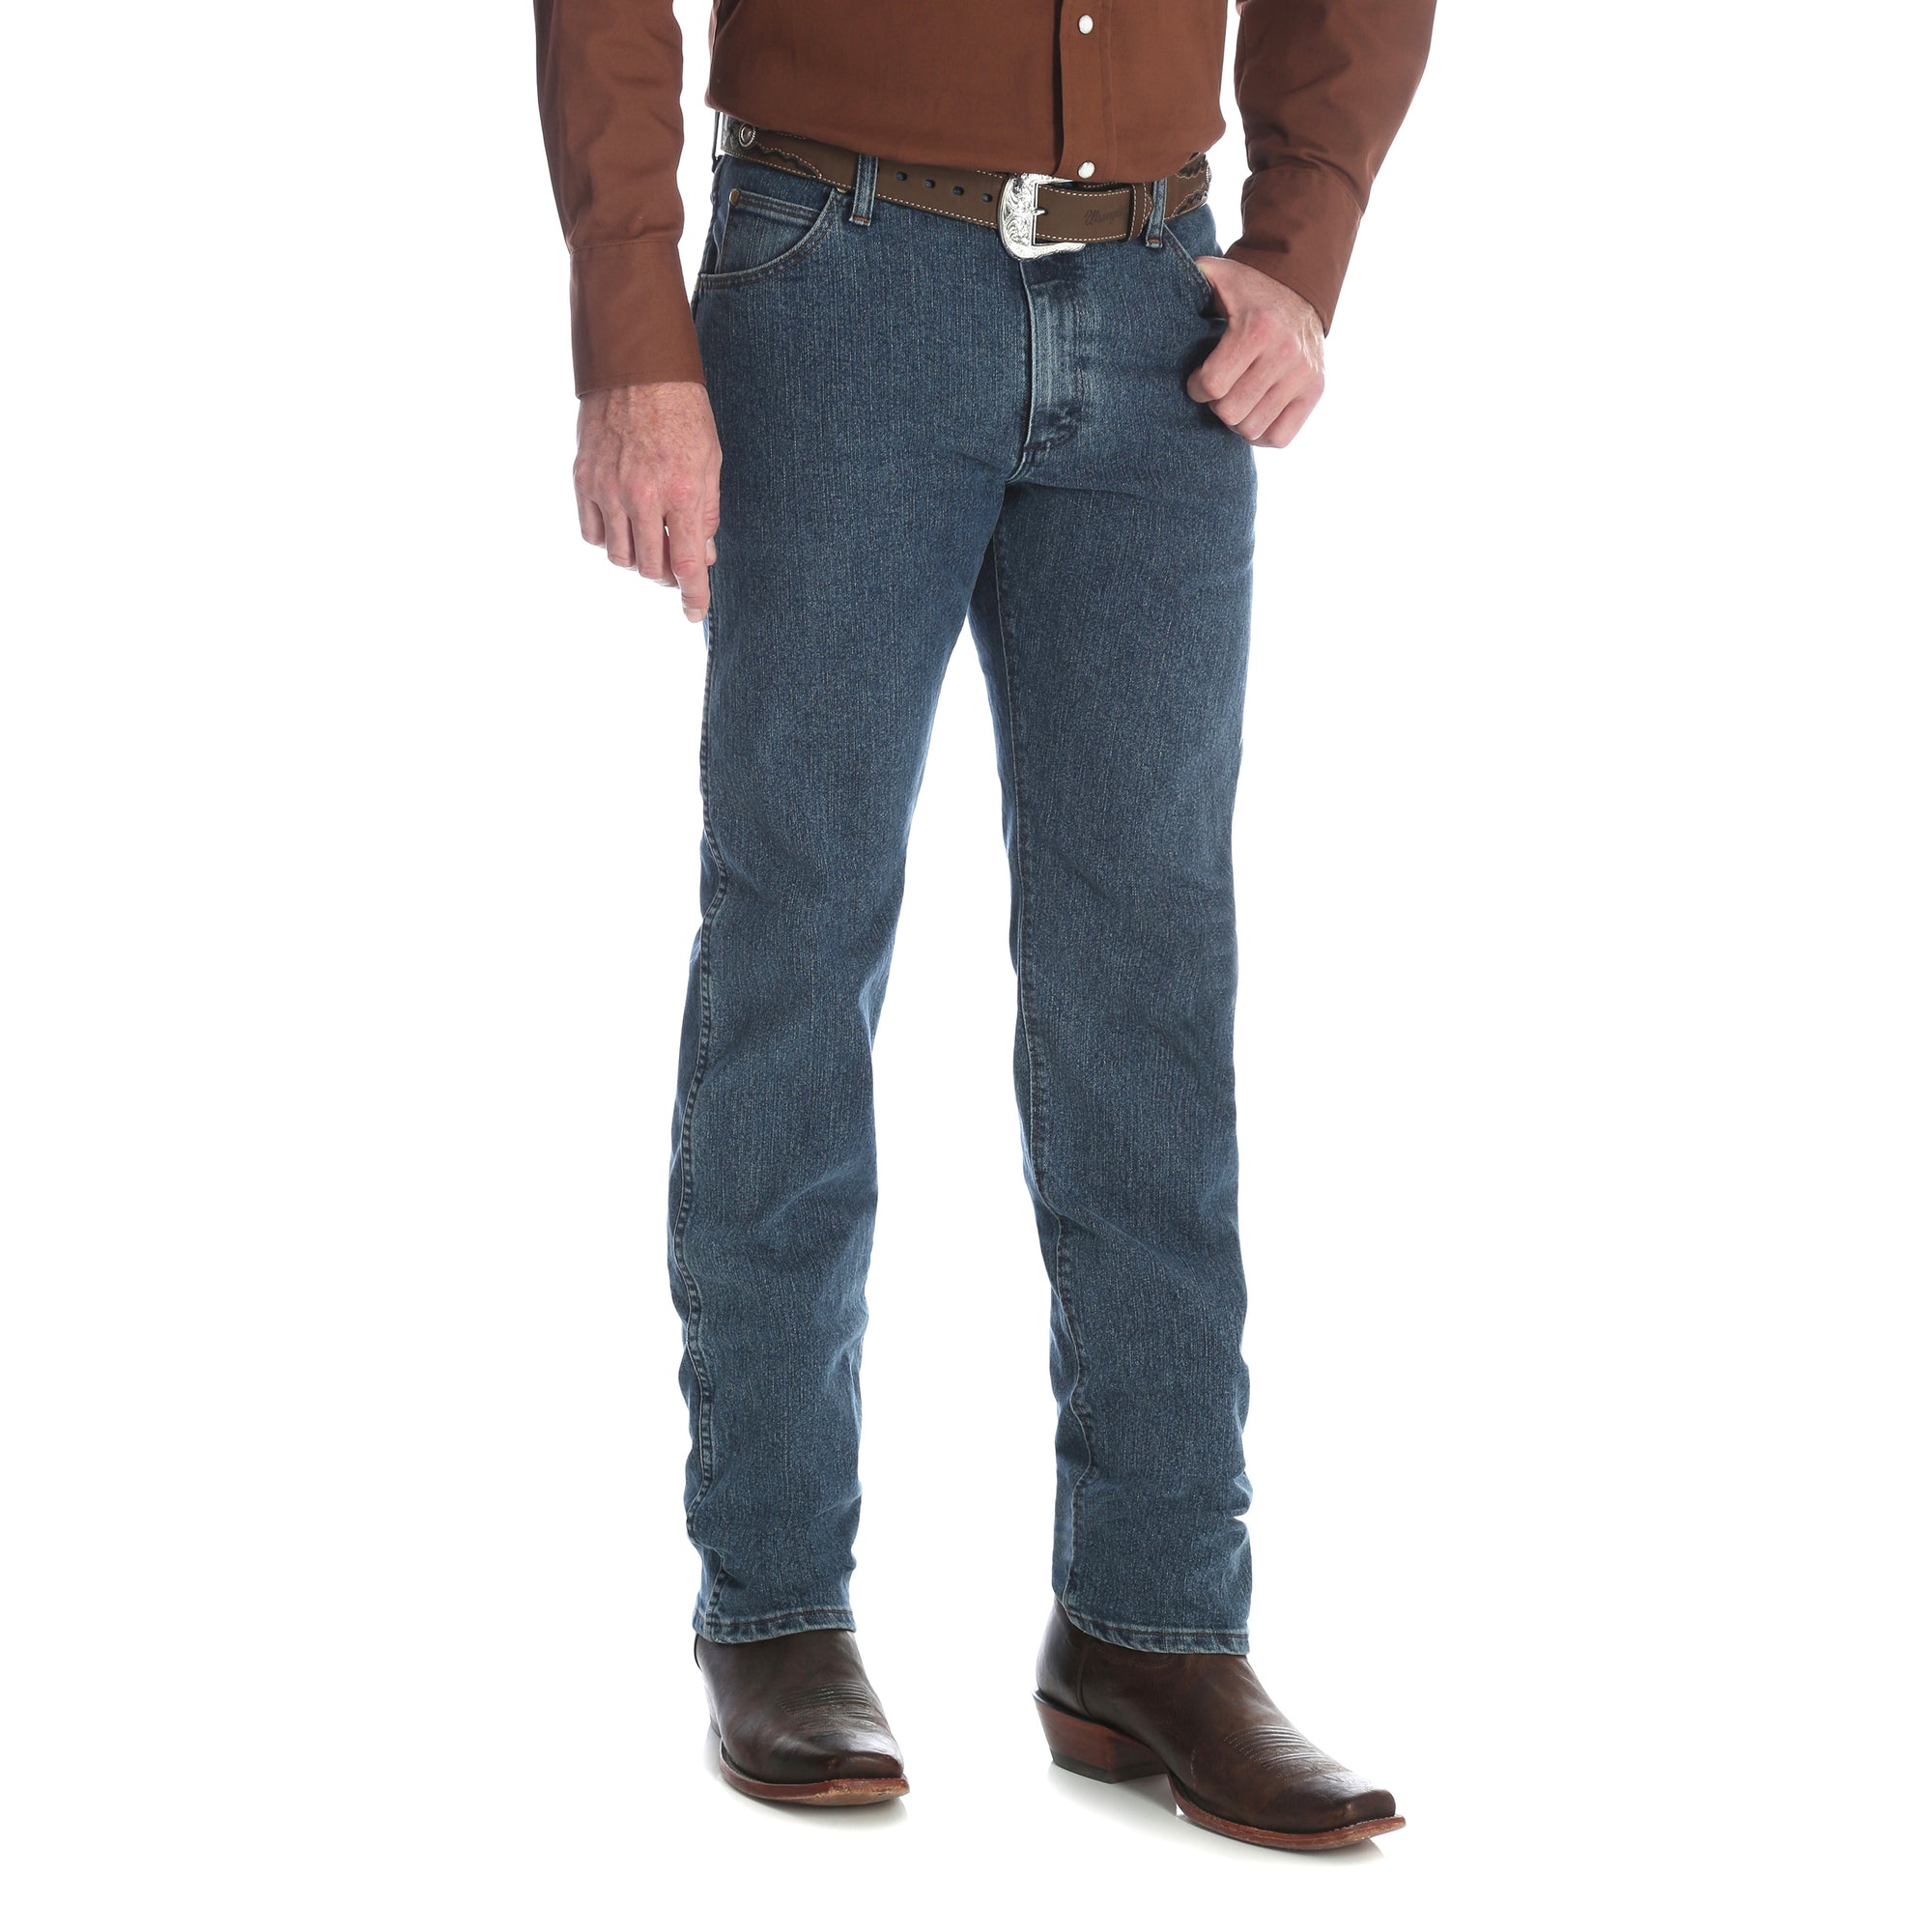 Wrangler Men's Premium Performance Cowboy Cut Regular Fit Jean STYLE 47MAVVS